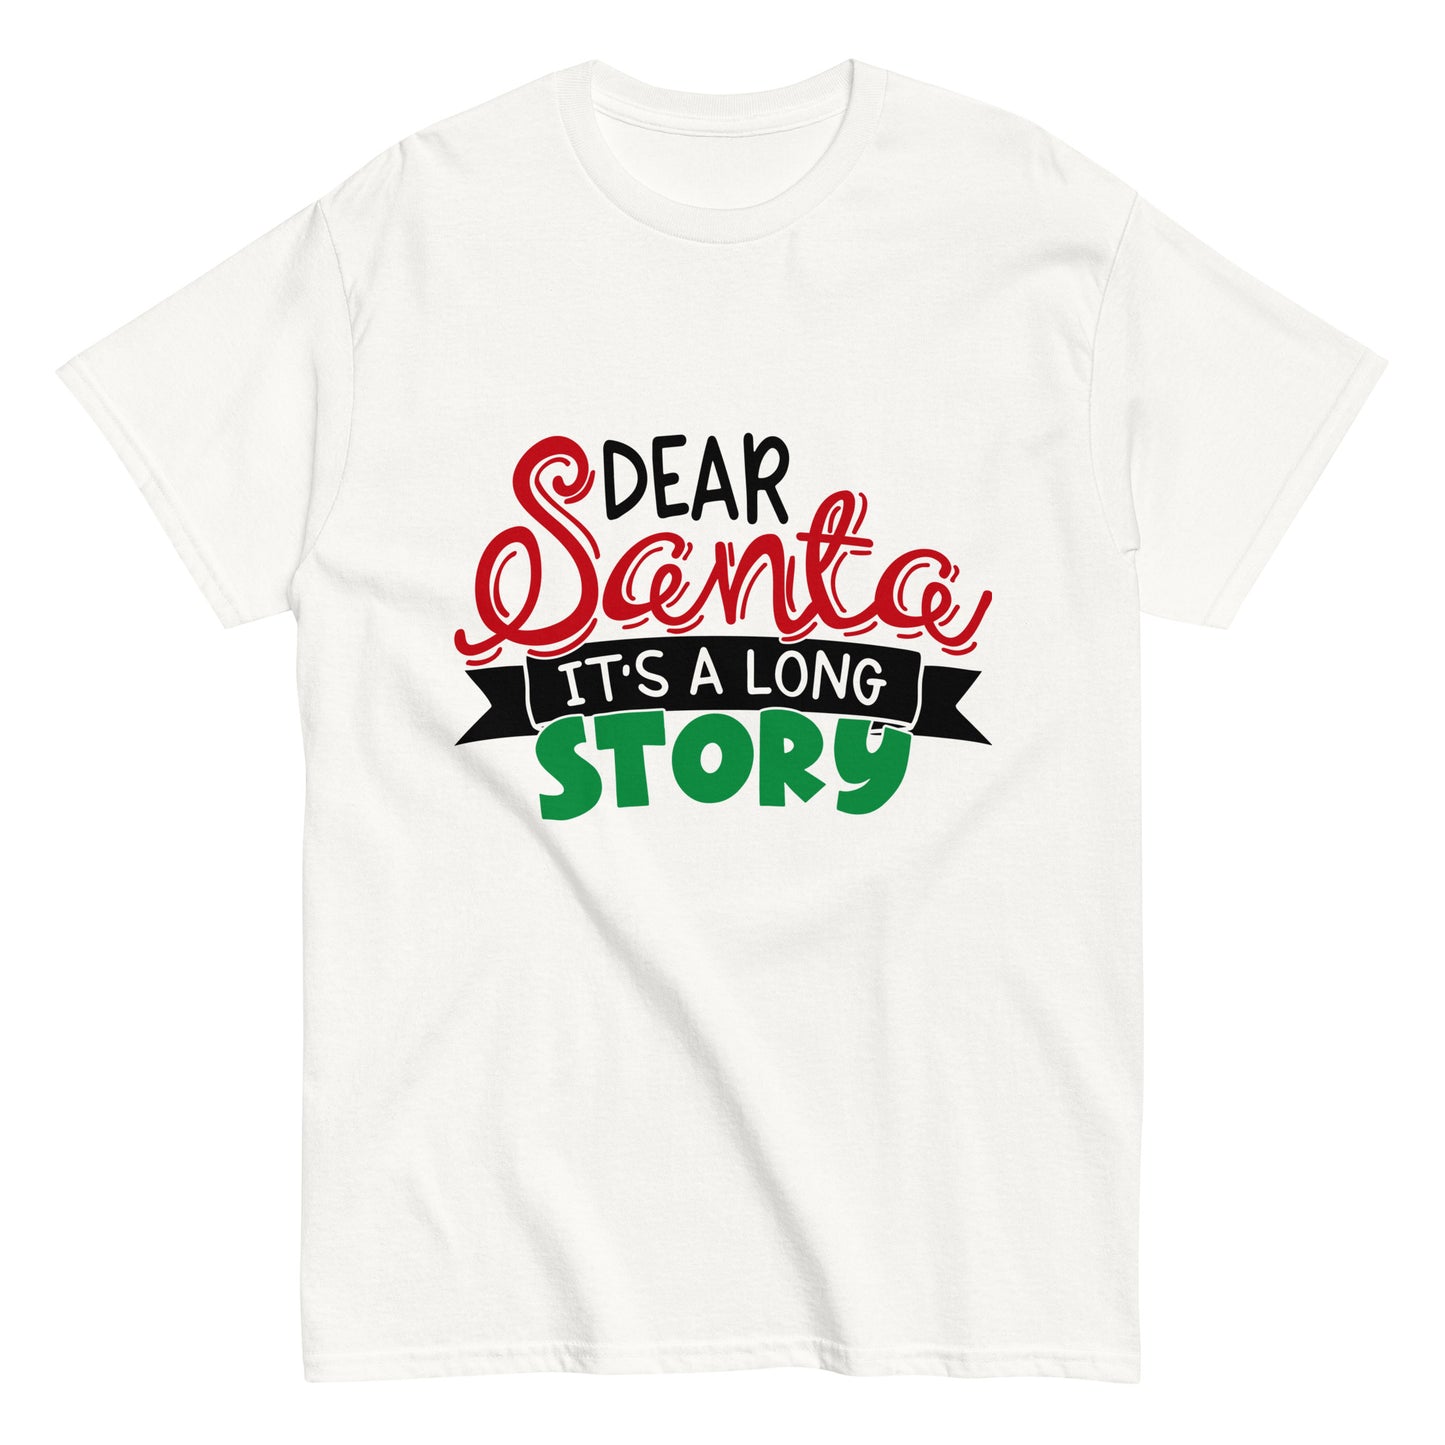 Dear Santa, It's a long story - Men's classic tee